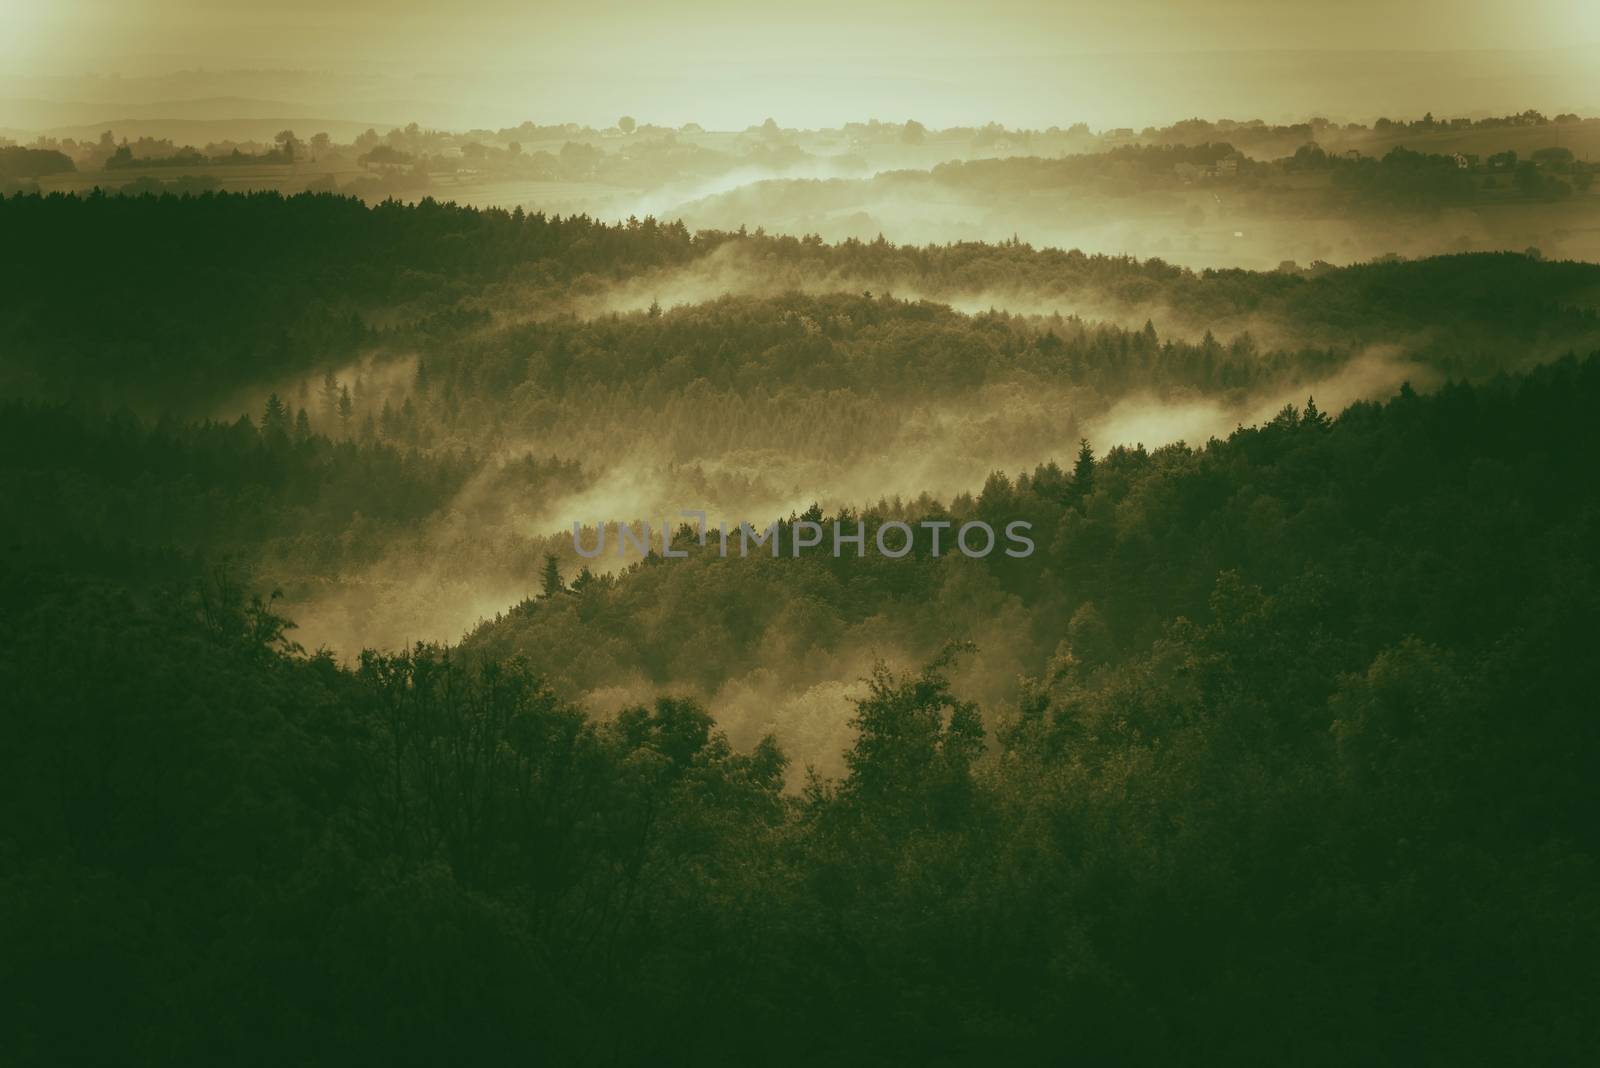 Foggy Hills of Lesser Poland Region in Central Europe. Foggy Landscape.